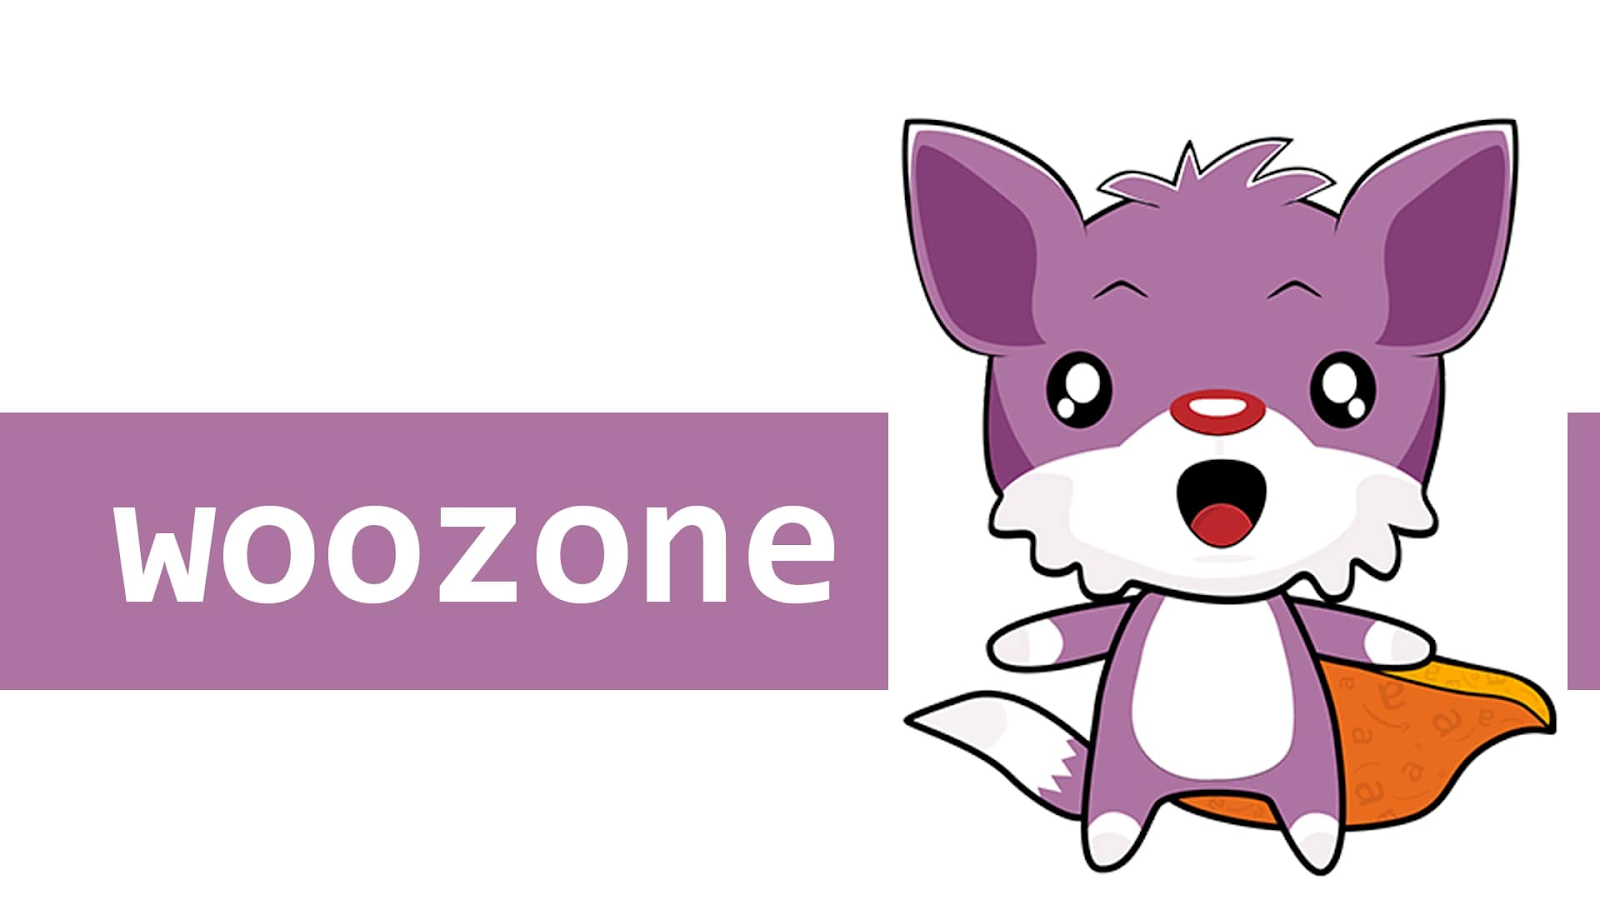 woozone fox character